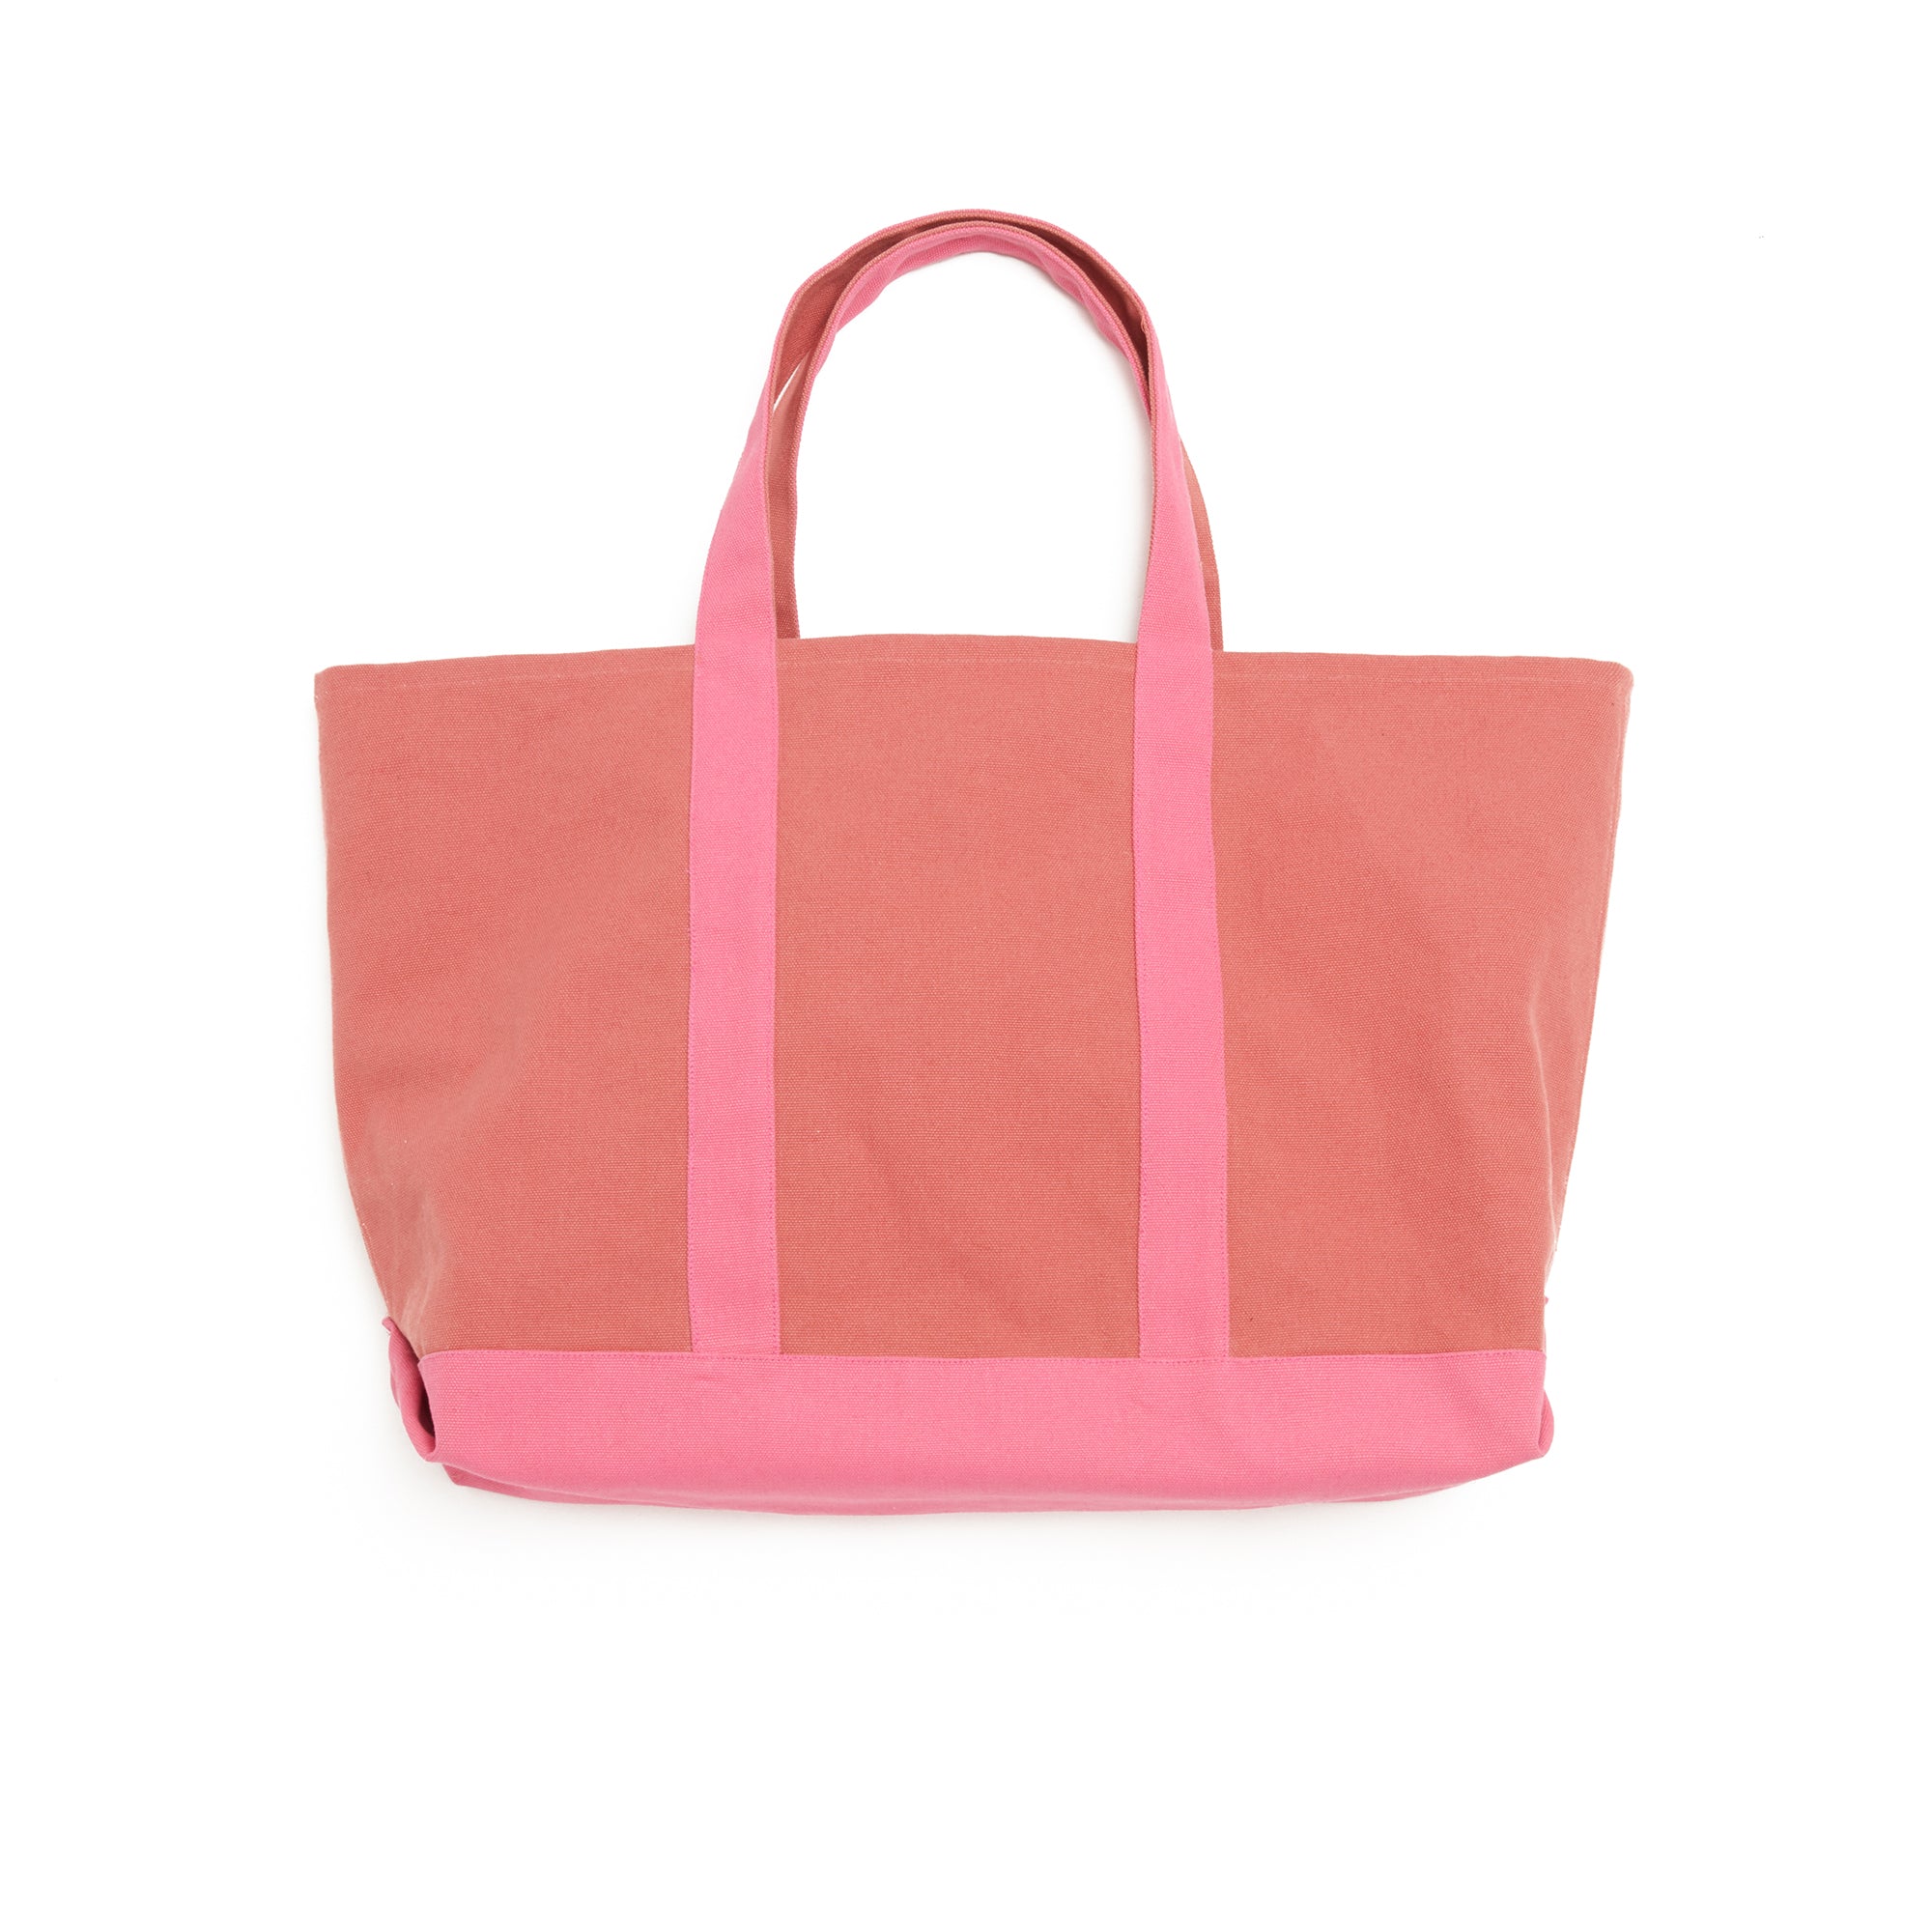 Merci cotton tote bag - Pink & Ecru